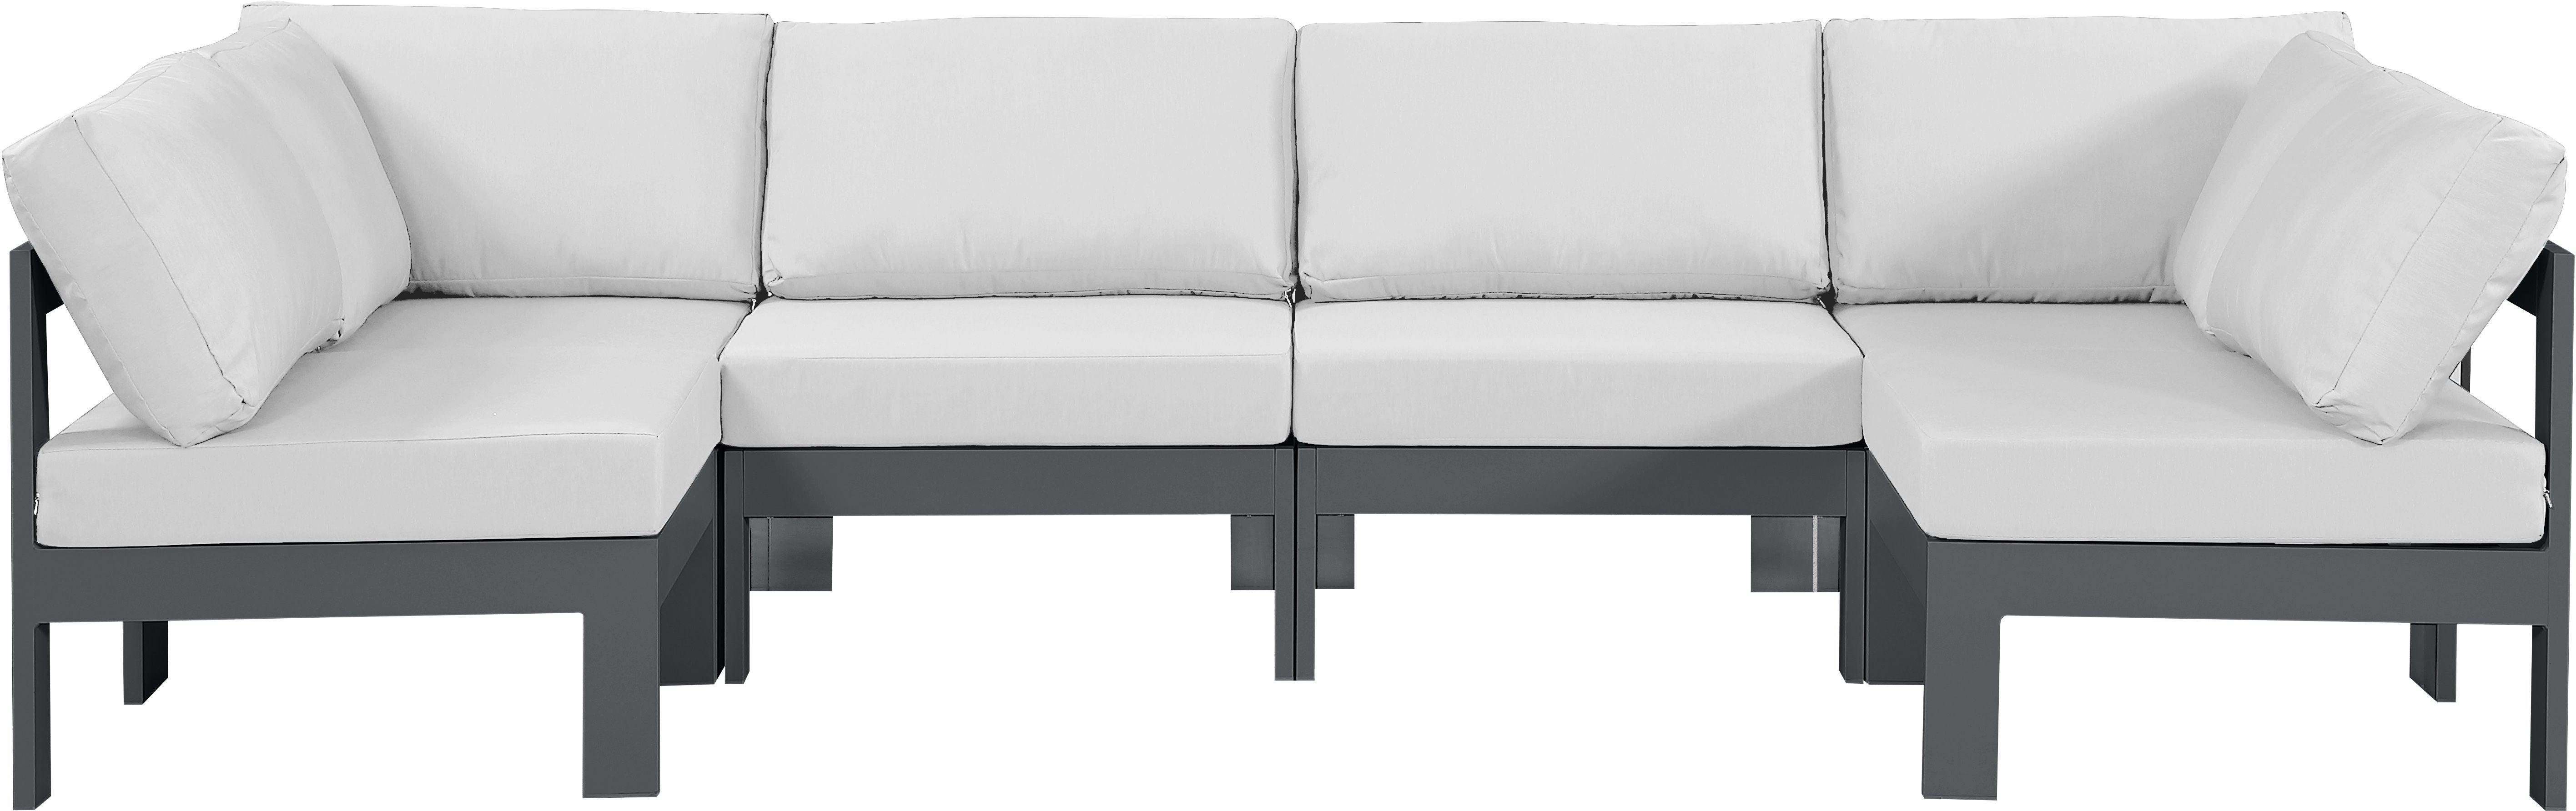 Meridian Furniture - Nizuc - Outdoor Patio Modular Sectional 6 Piece - White - Fabric - 5th Avenue Furniture